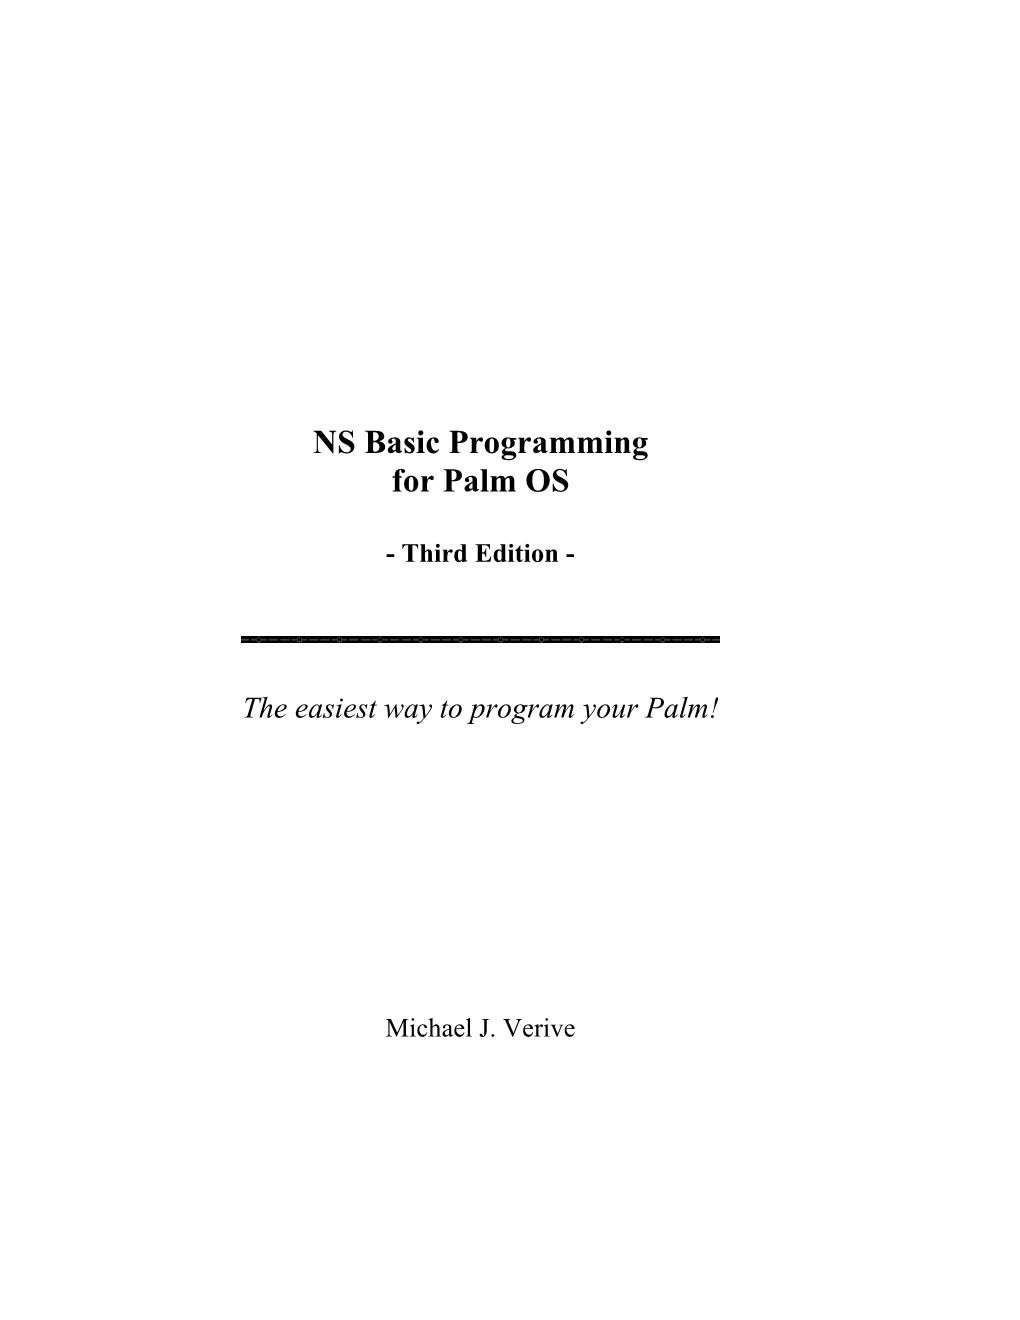 S Basic Programming for Palm OS